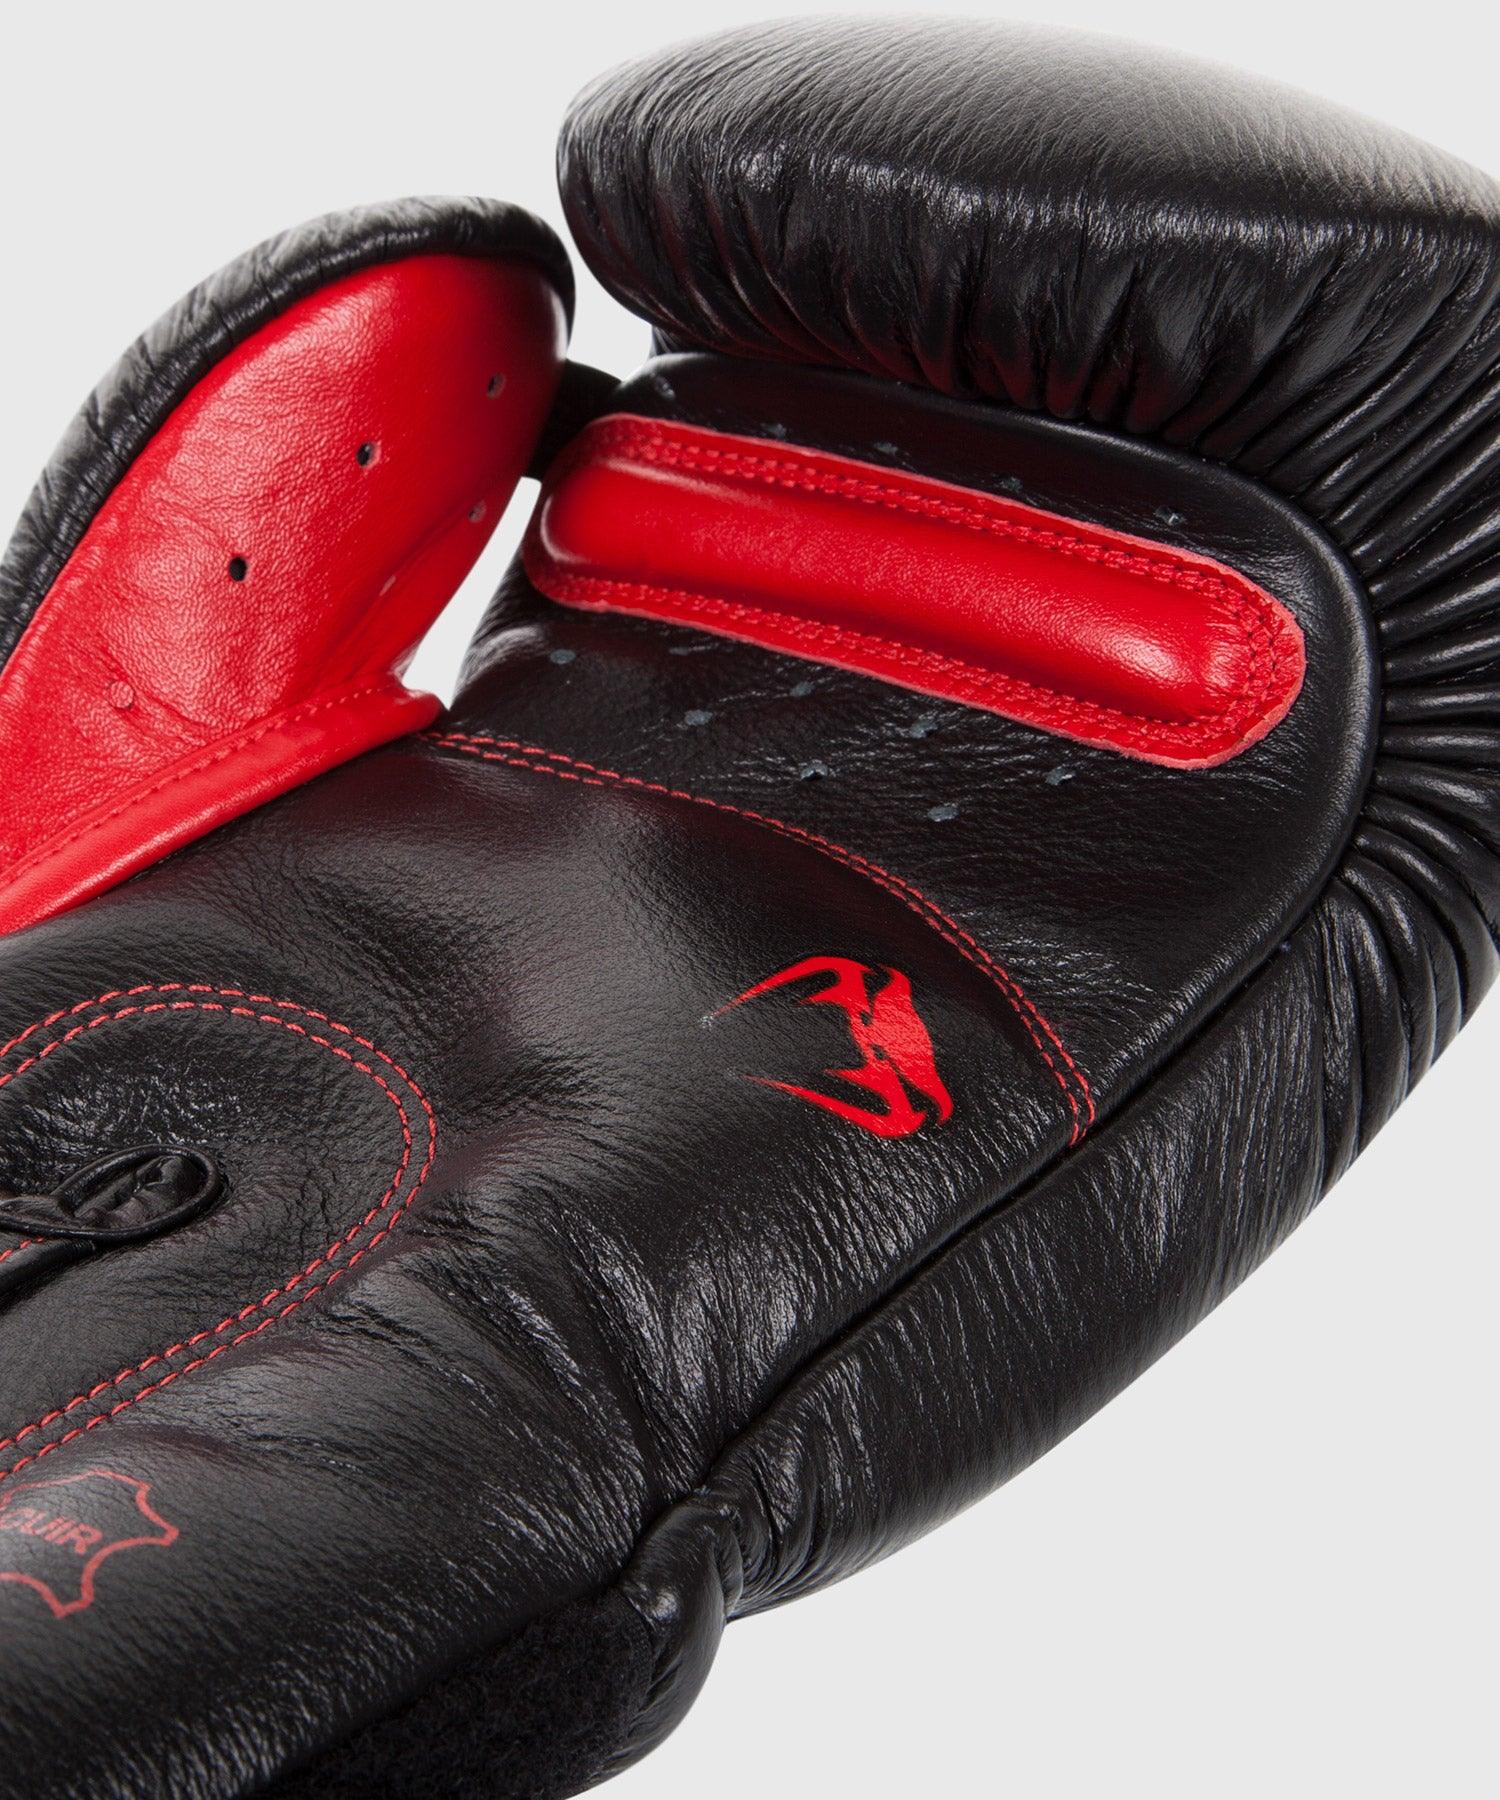 Venum Giant 3.0 Boxing Gloves - Nappa Leather - Black Devil Picture 3